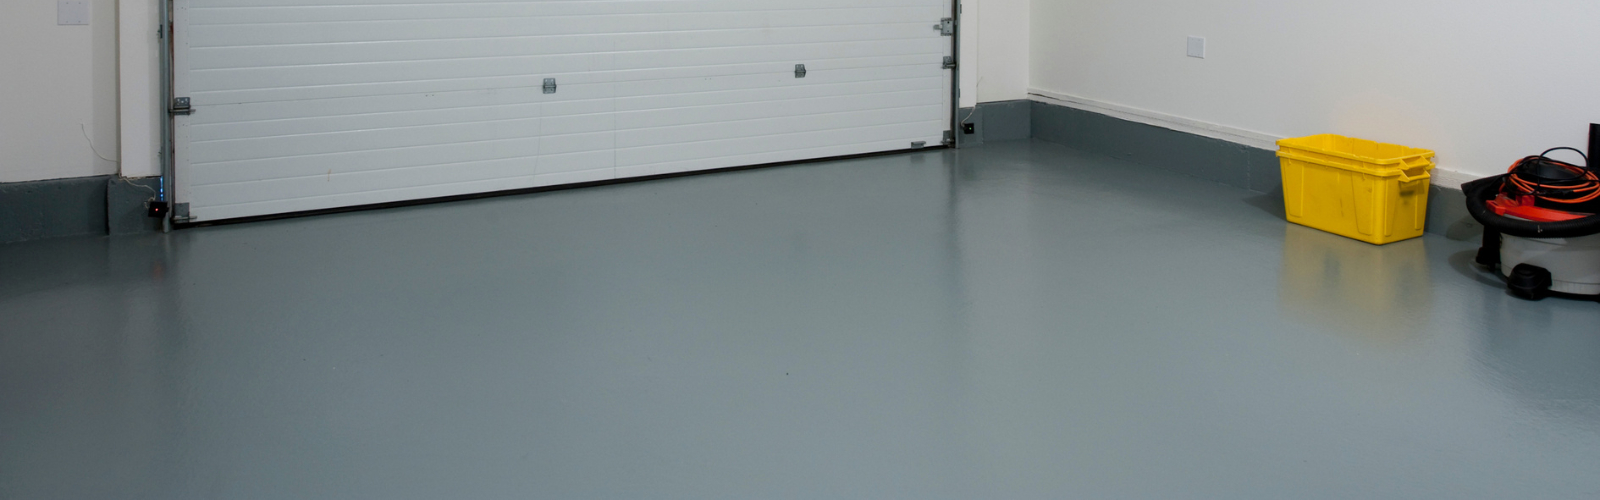 Benefits of Epoxy Flooring In Your Garage